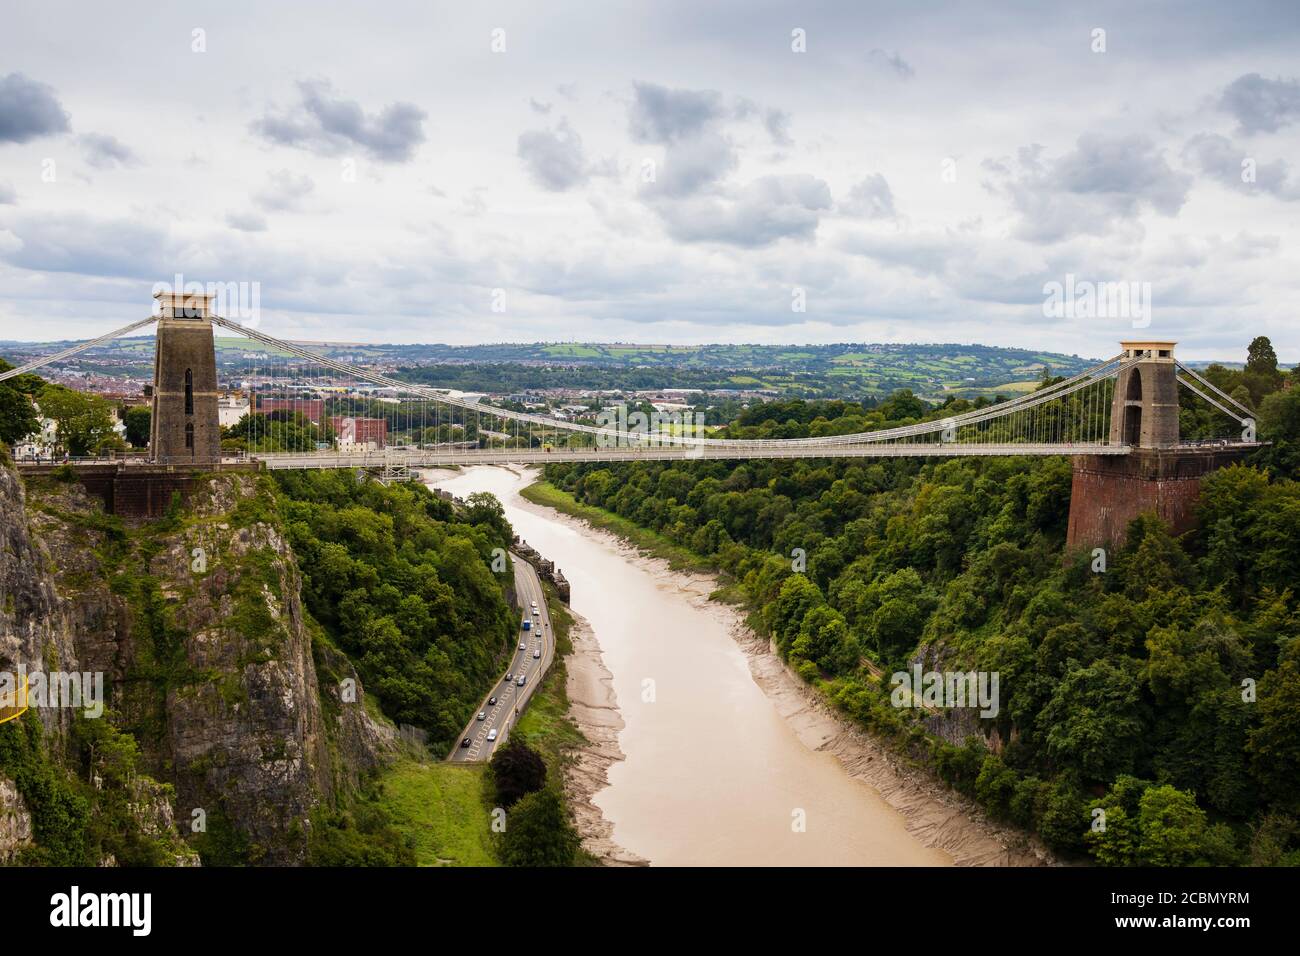 Isambard Kingdoms Brunels Clifton Suspension bridge over the river avon gorge.  Bristol, England. July 2020 Stock Photo